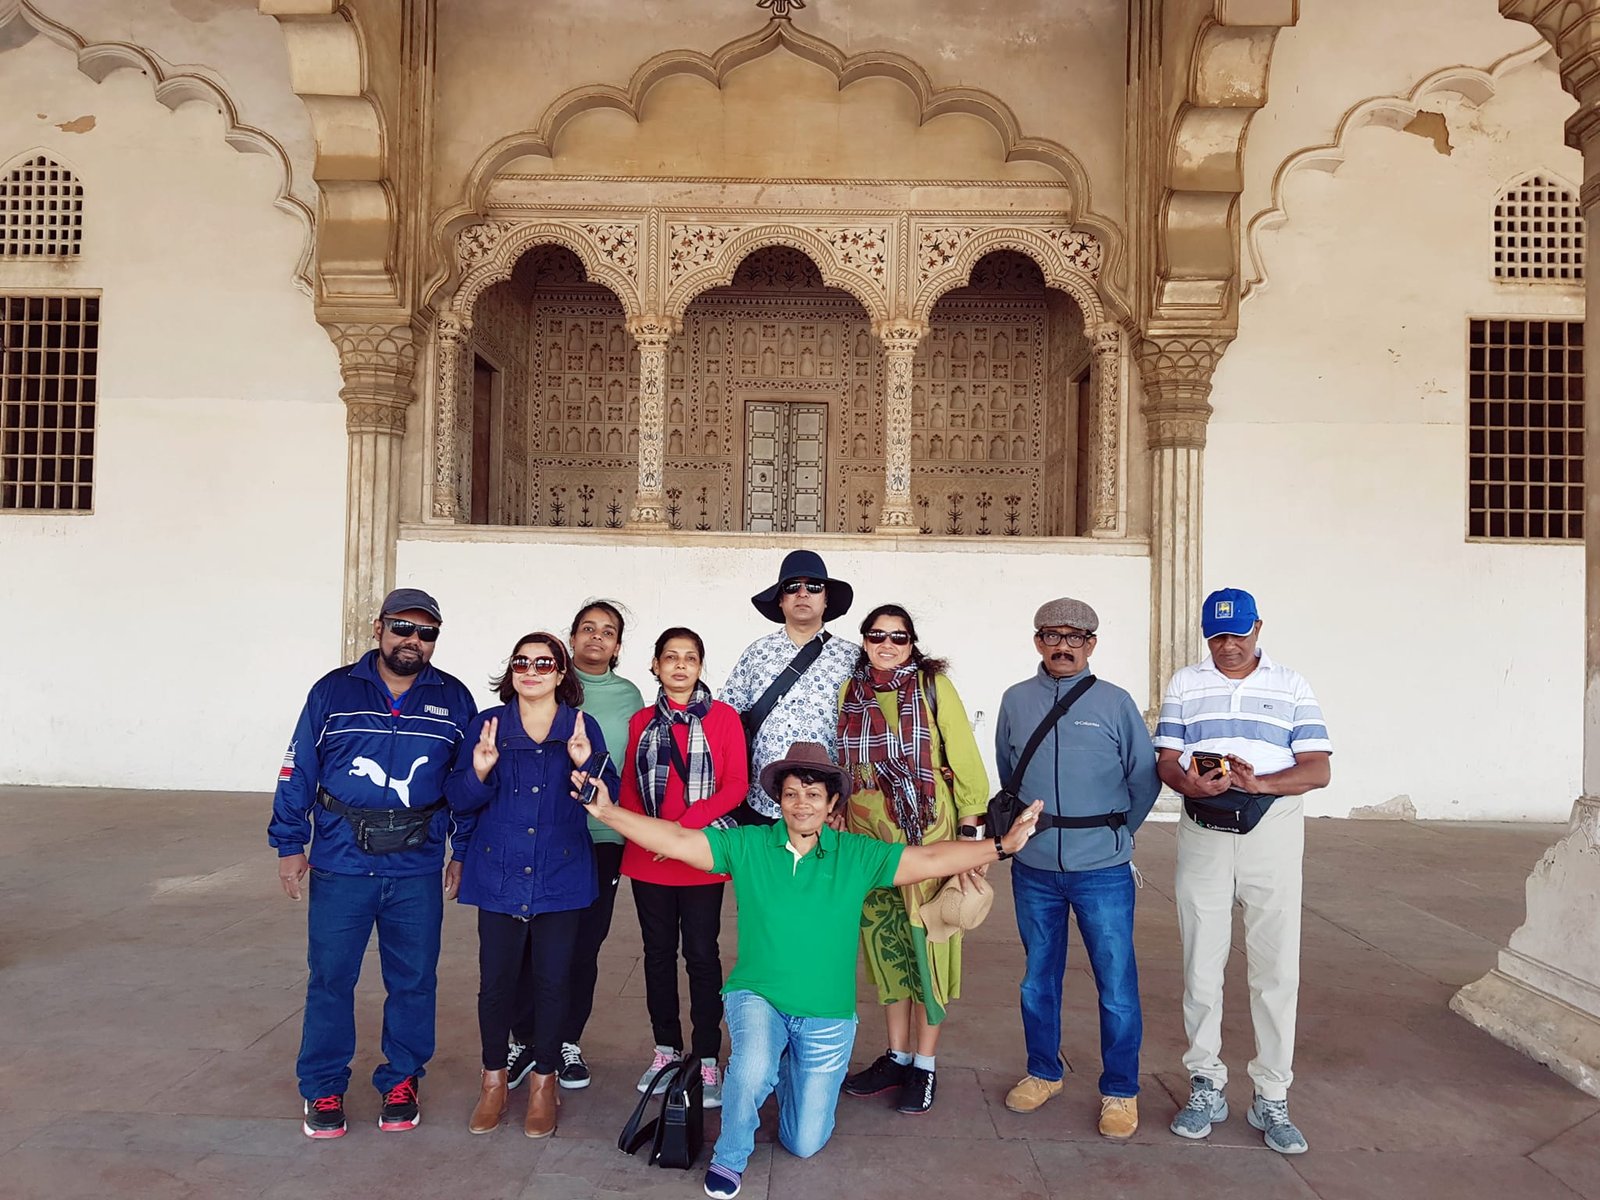 Agra Fort and Taj Mahal Ticket